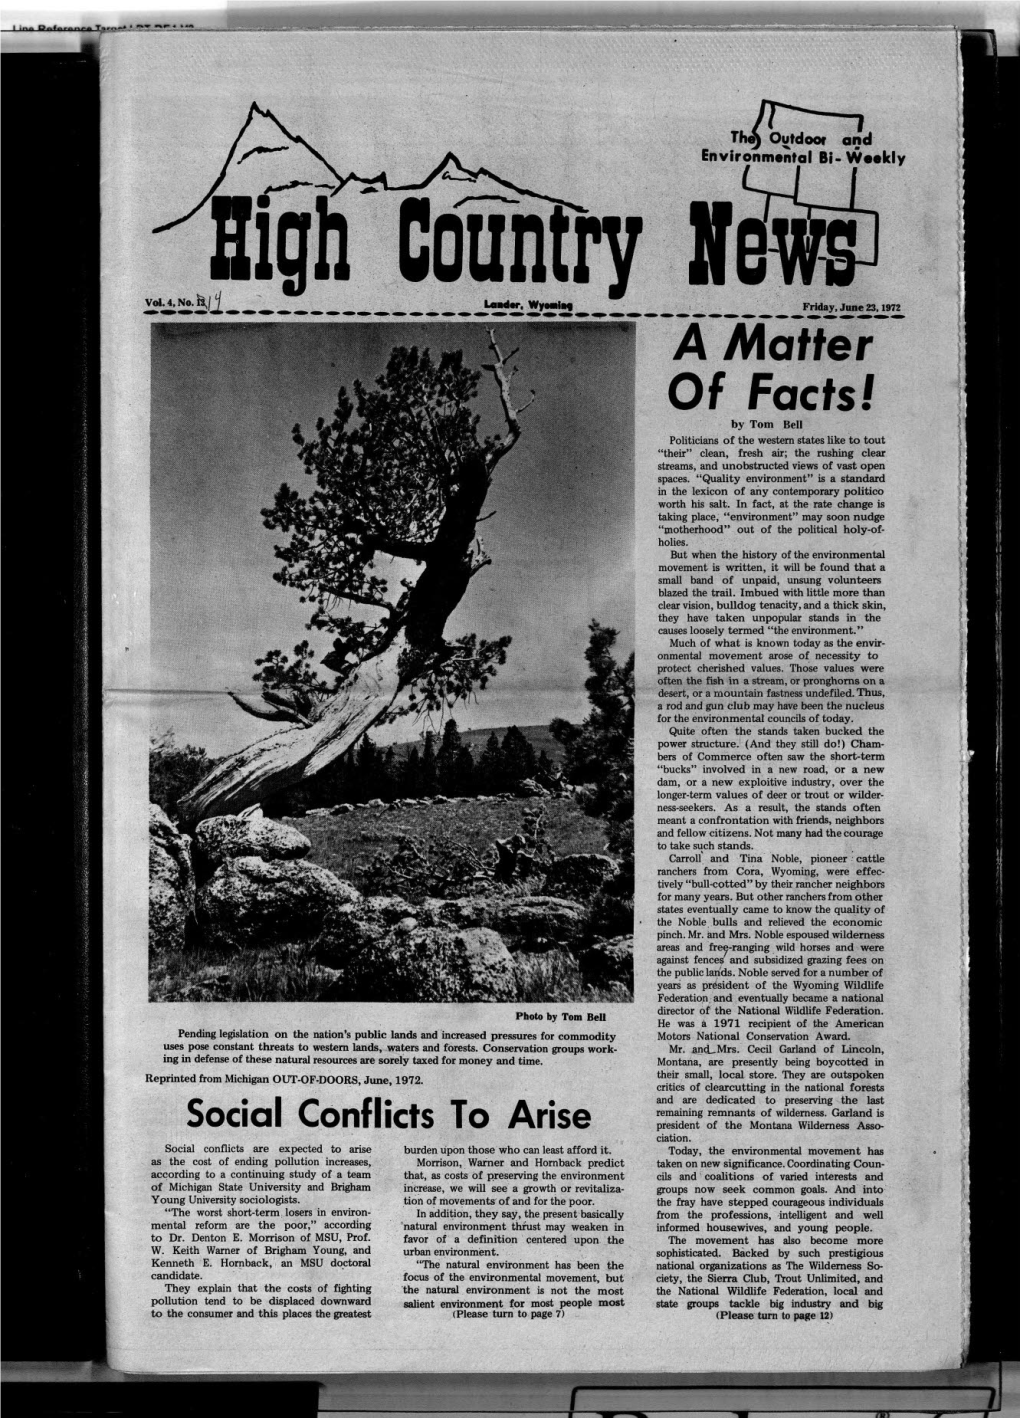 High Country News Vol. 4.14, July 7, 1972